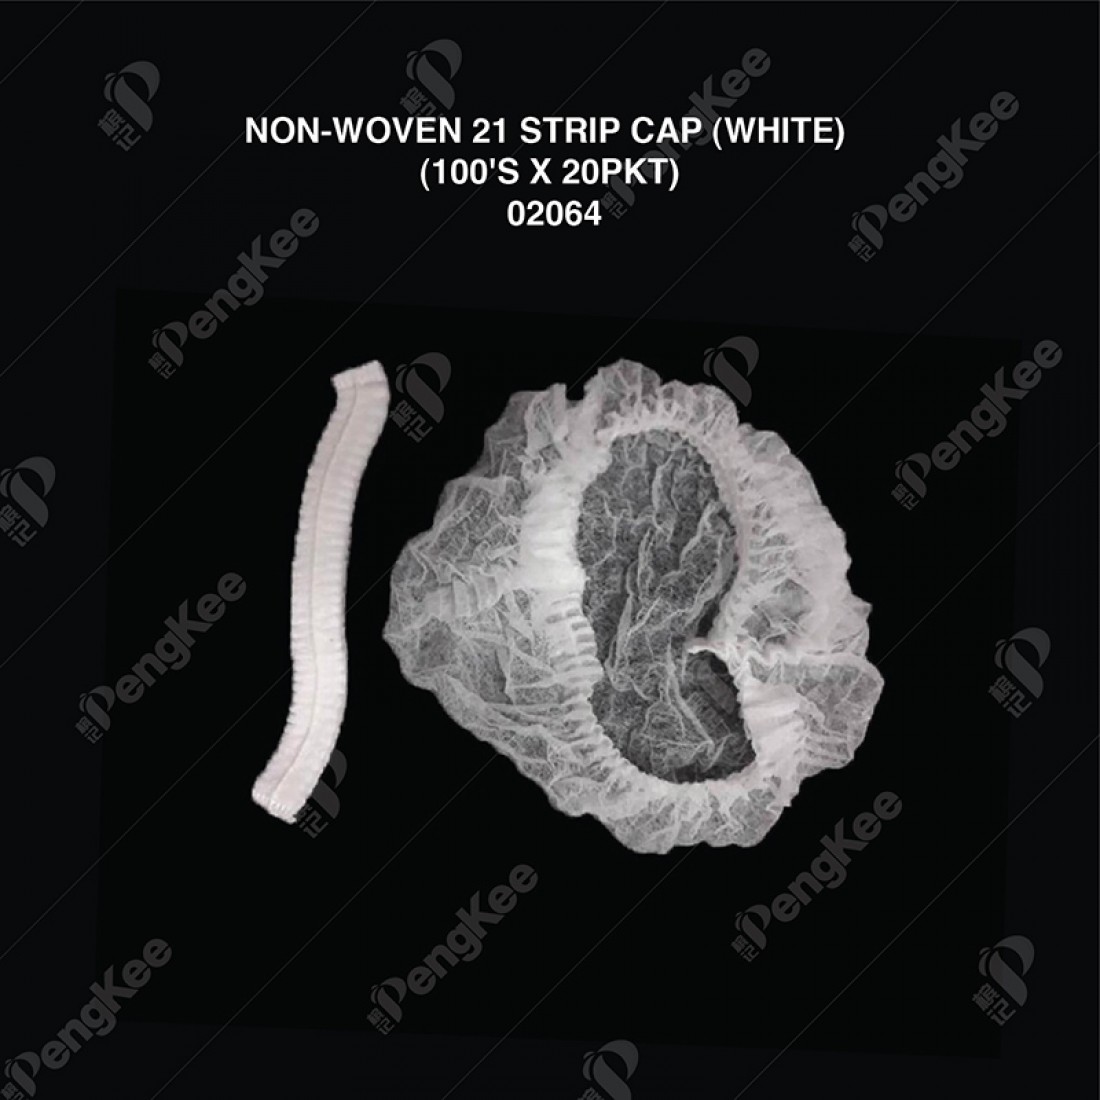 NON-WOVEN 21" STRIP CAP (WHITE) (100'S X 20PKT)